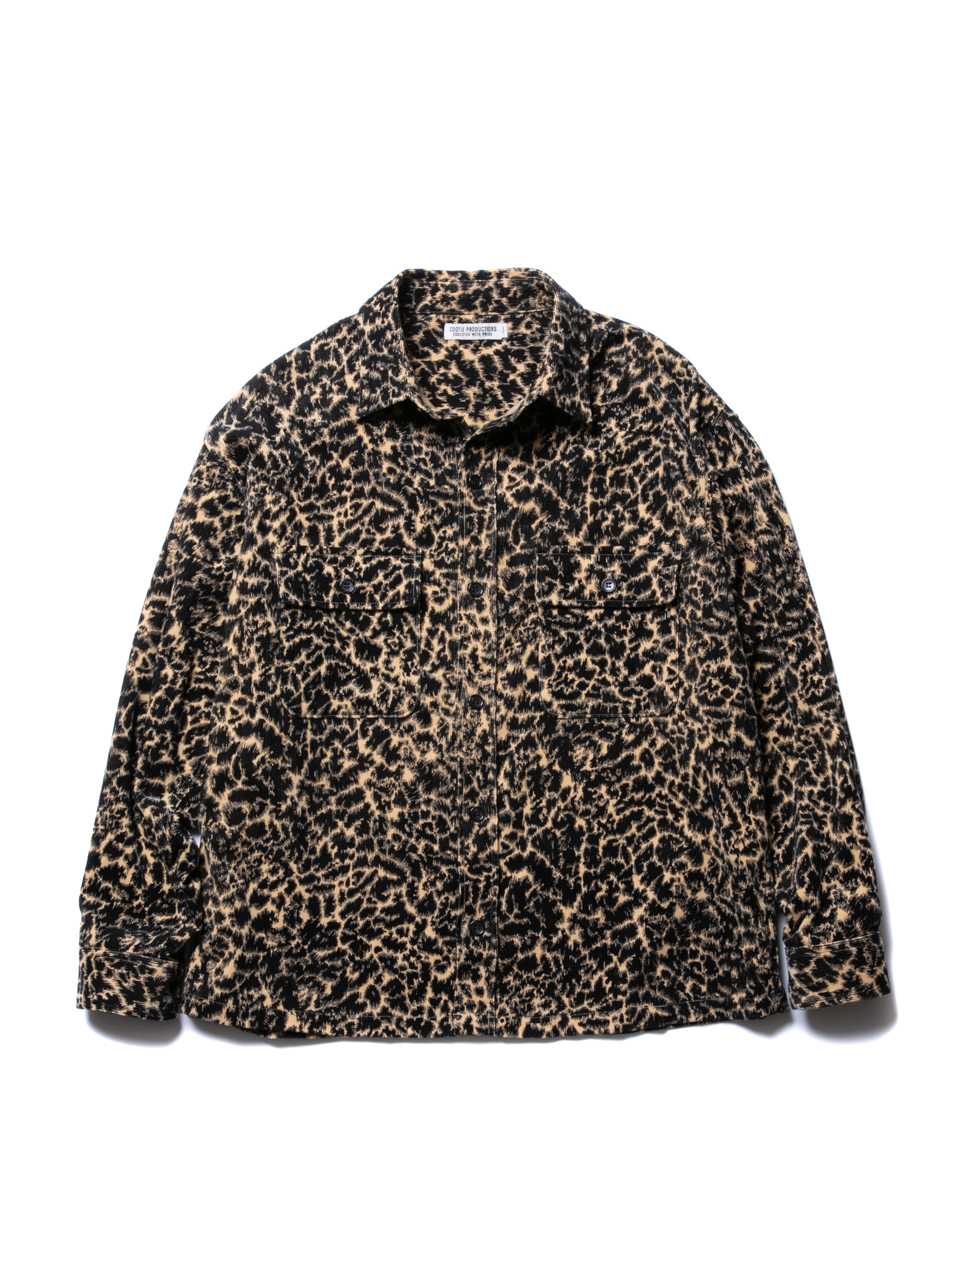 cootie corduroy leopard CPO jacket肩幅57cm